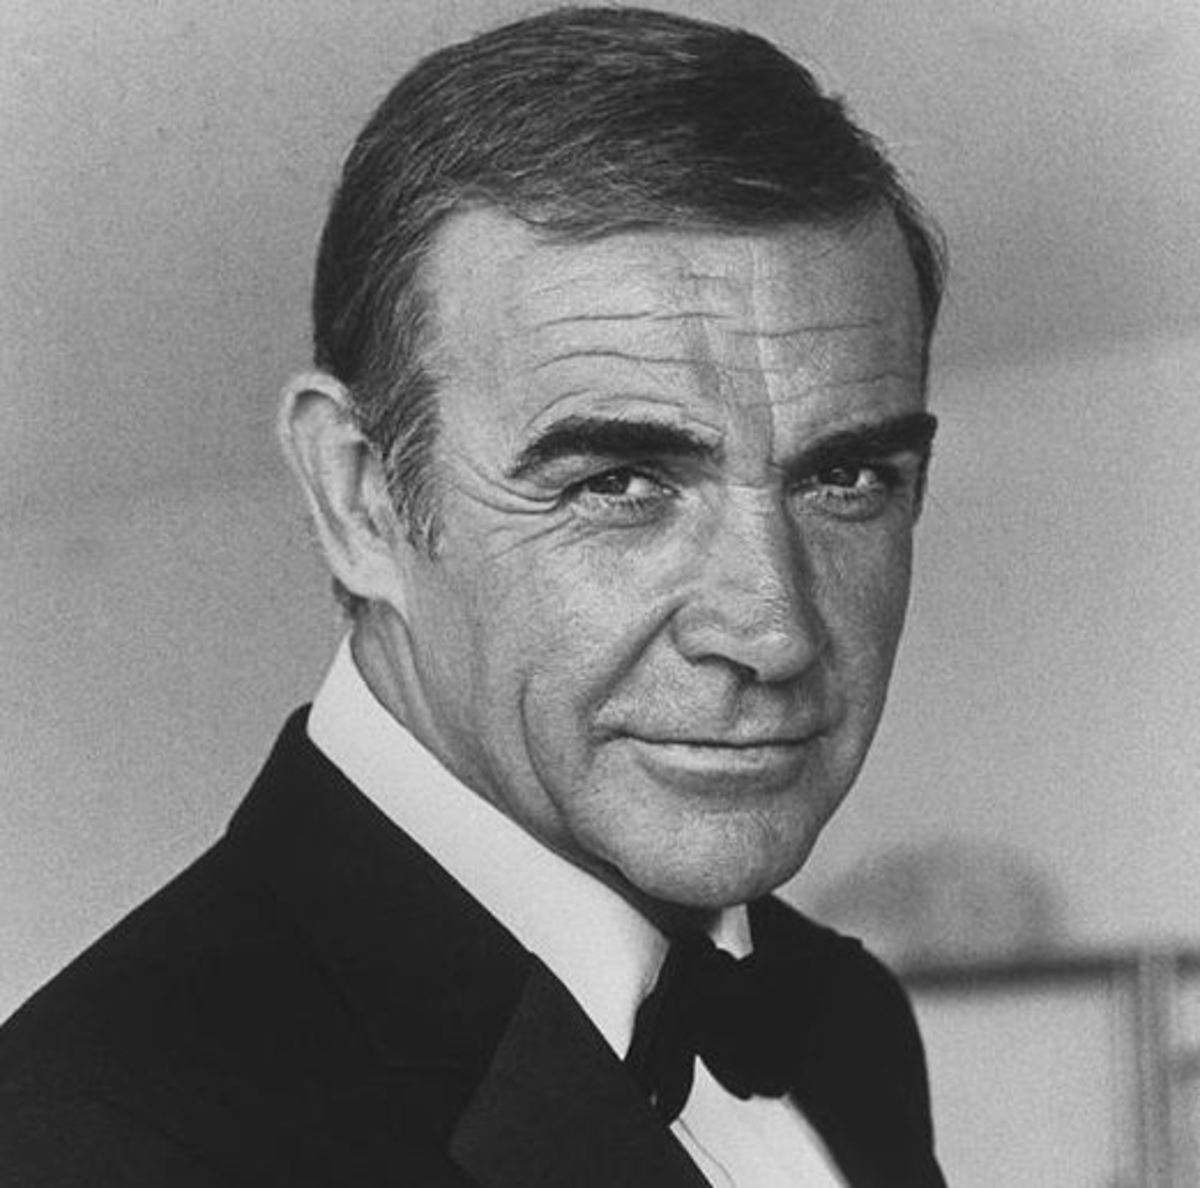 Bond, James Bond portrayed by Sean Connery 